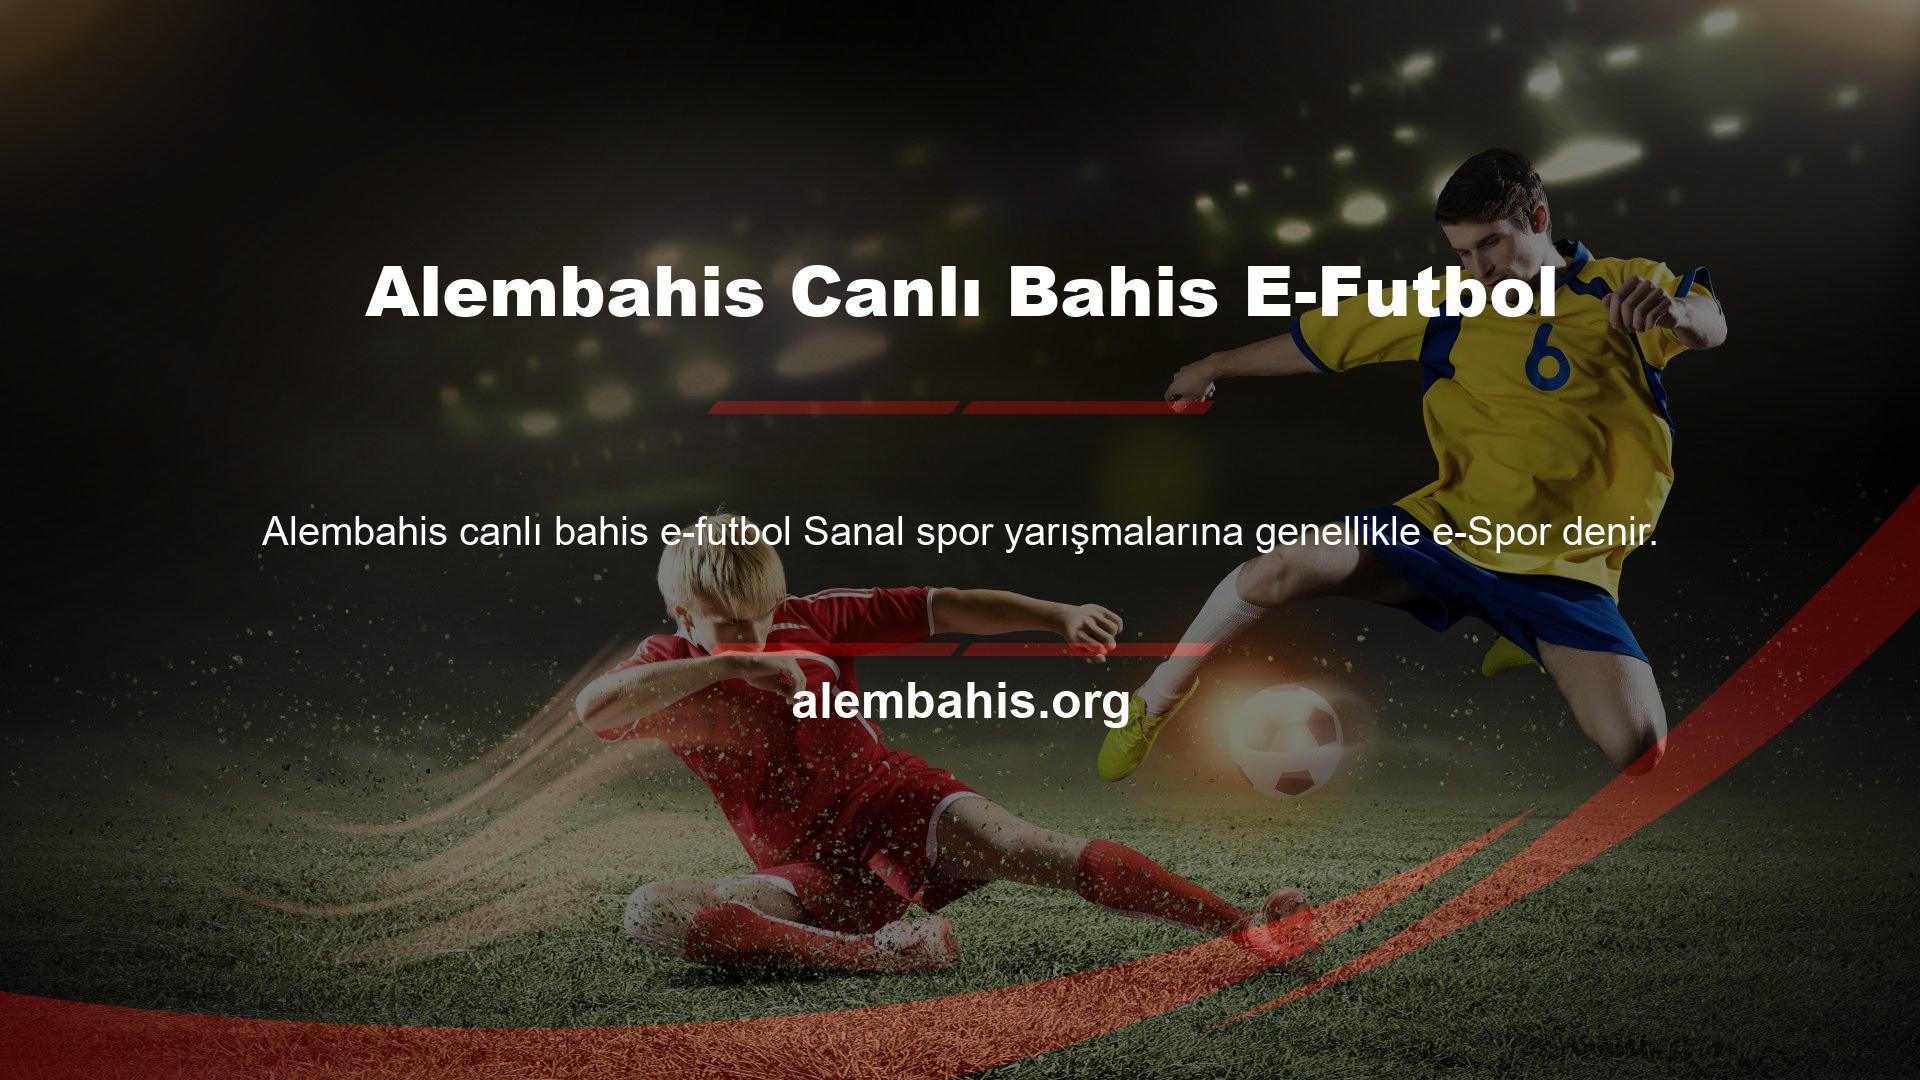 Alembahis Canlı Bahis E-Futbol